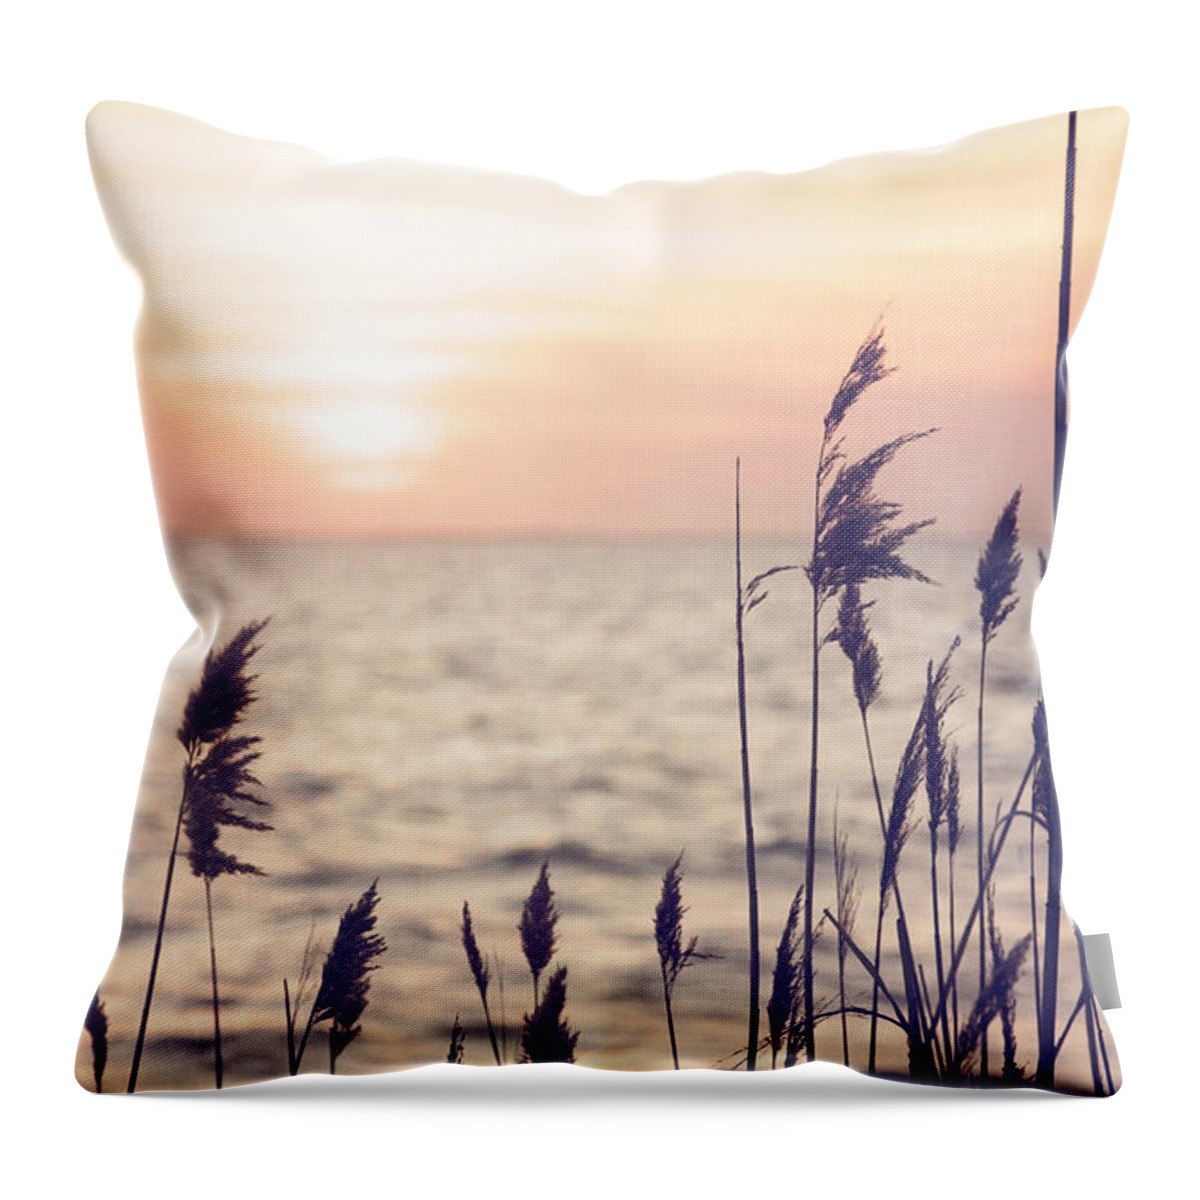 Dune Grass Throw Pillow featuring the photograph Dune Grass in the Sunset by Debra Fedchin